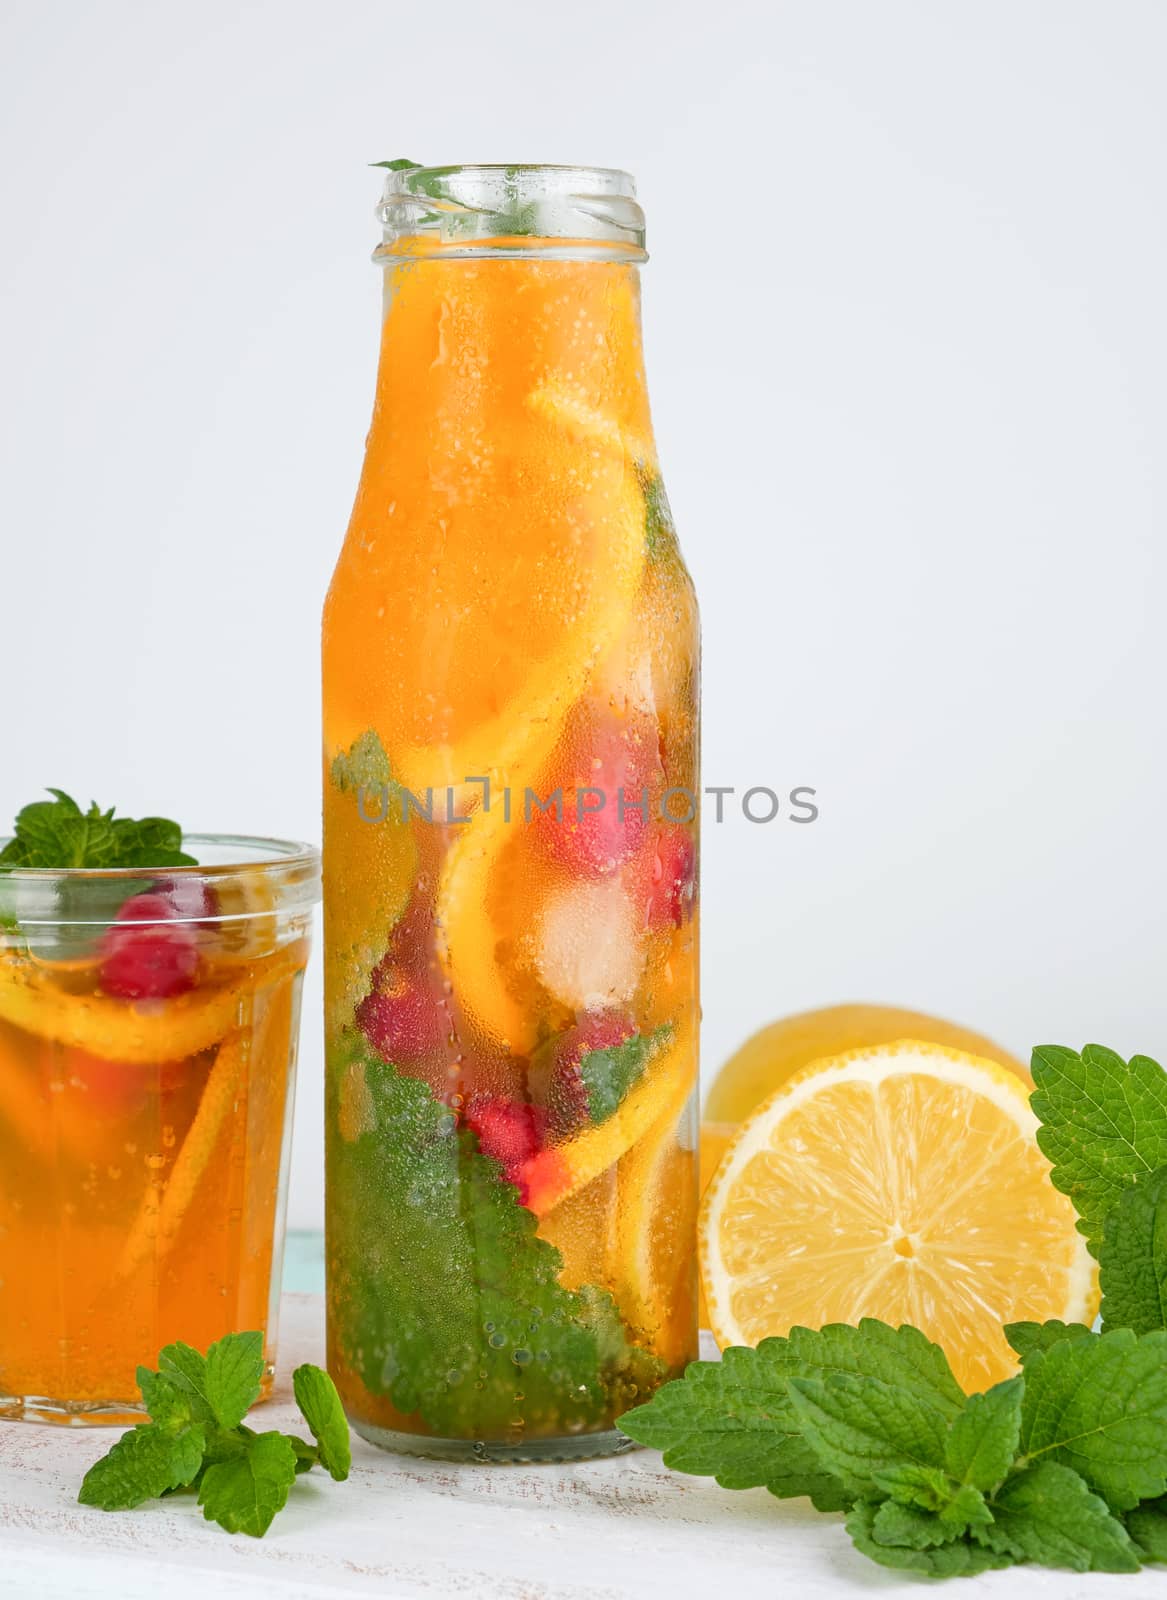 summer refreshing drink lemonade with lemons, cranberry, mint le by ndanko